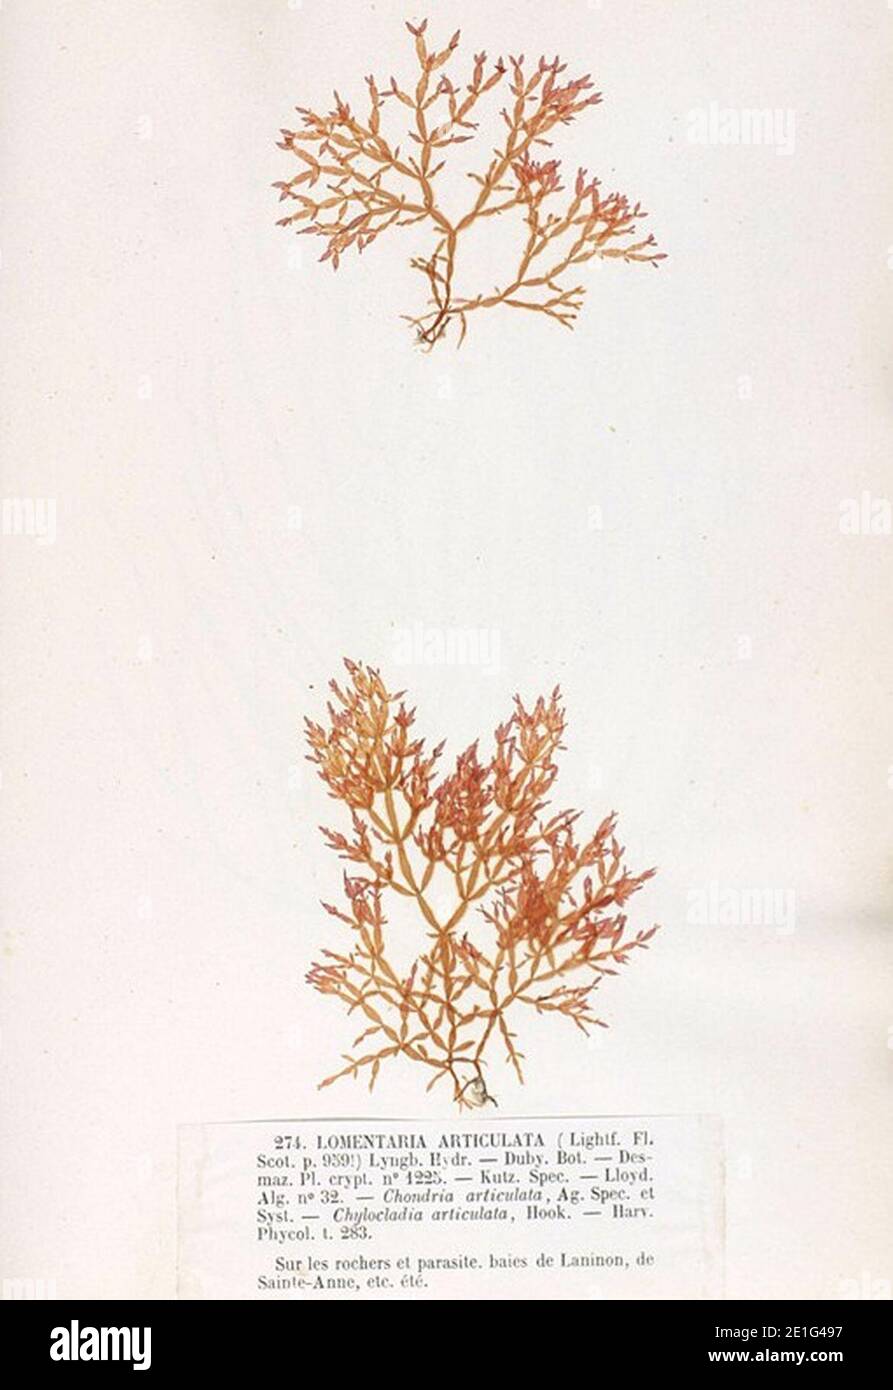 Lomentaria articulata Crouan. Stock Photo